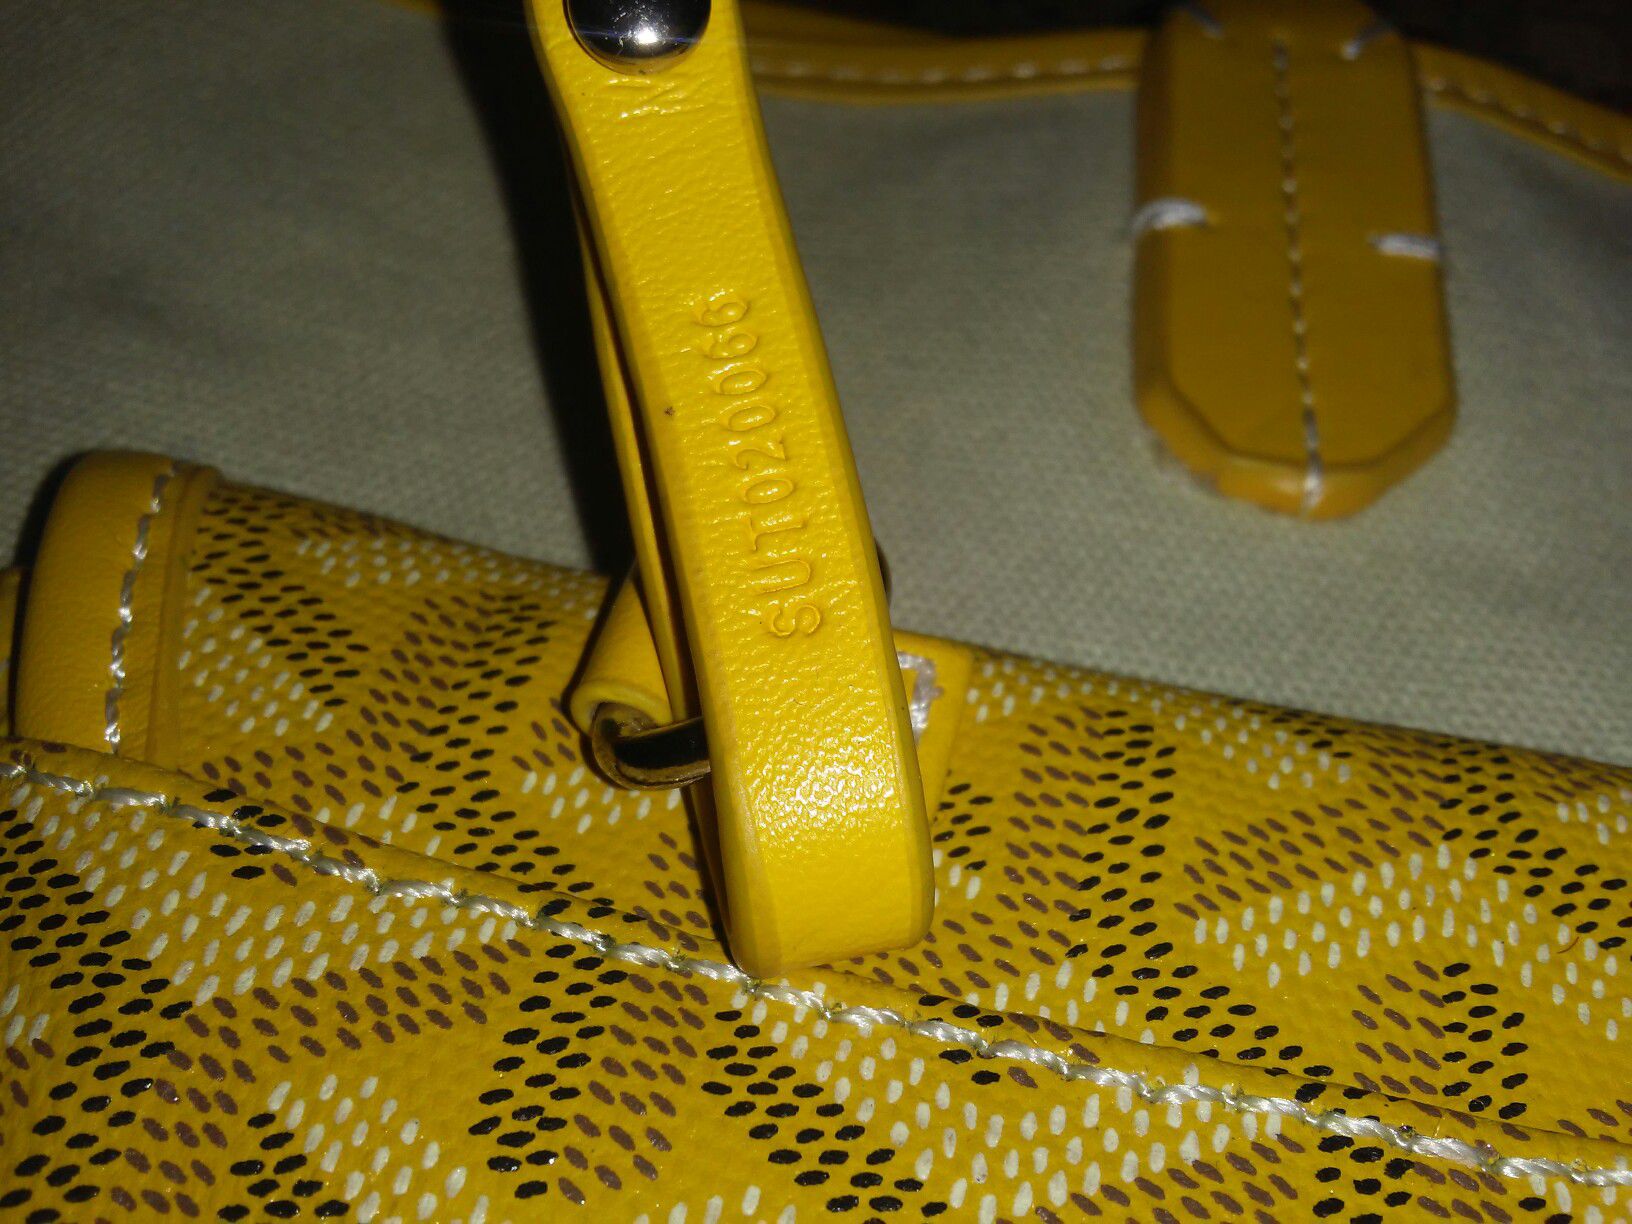 Yellow Goyard Bag - 11 For Sale on 1stDibs  goyard bag yellow, goyard tote  bag yellow, goyard yellow bag price